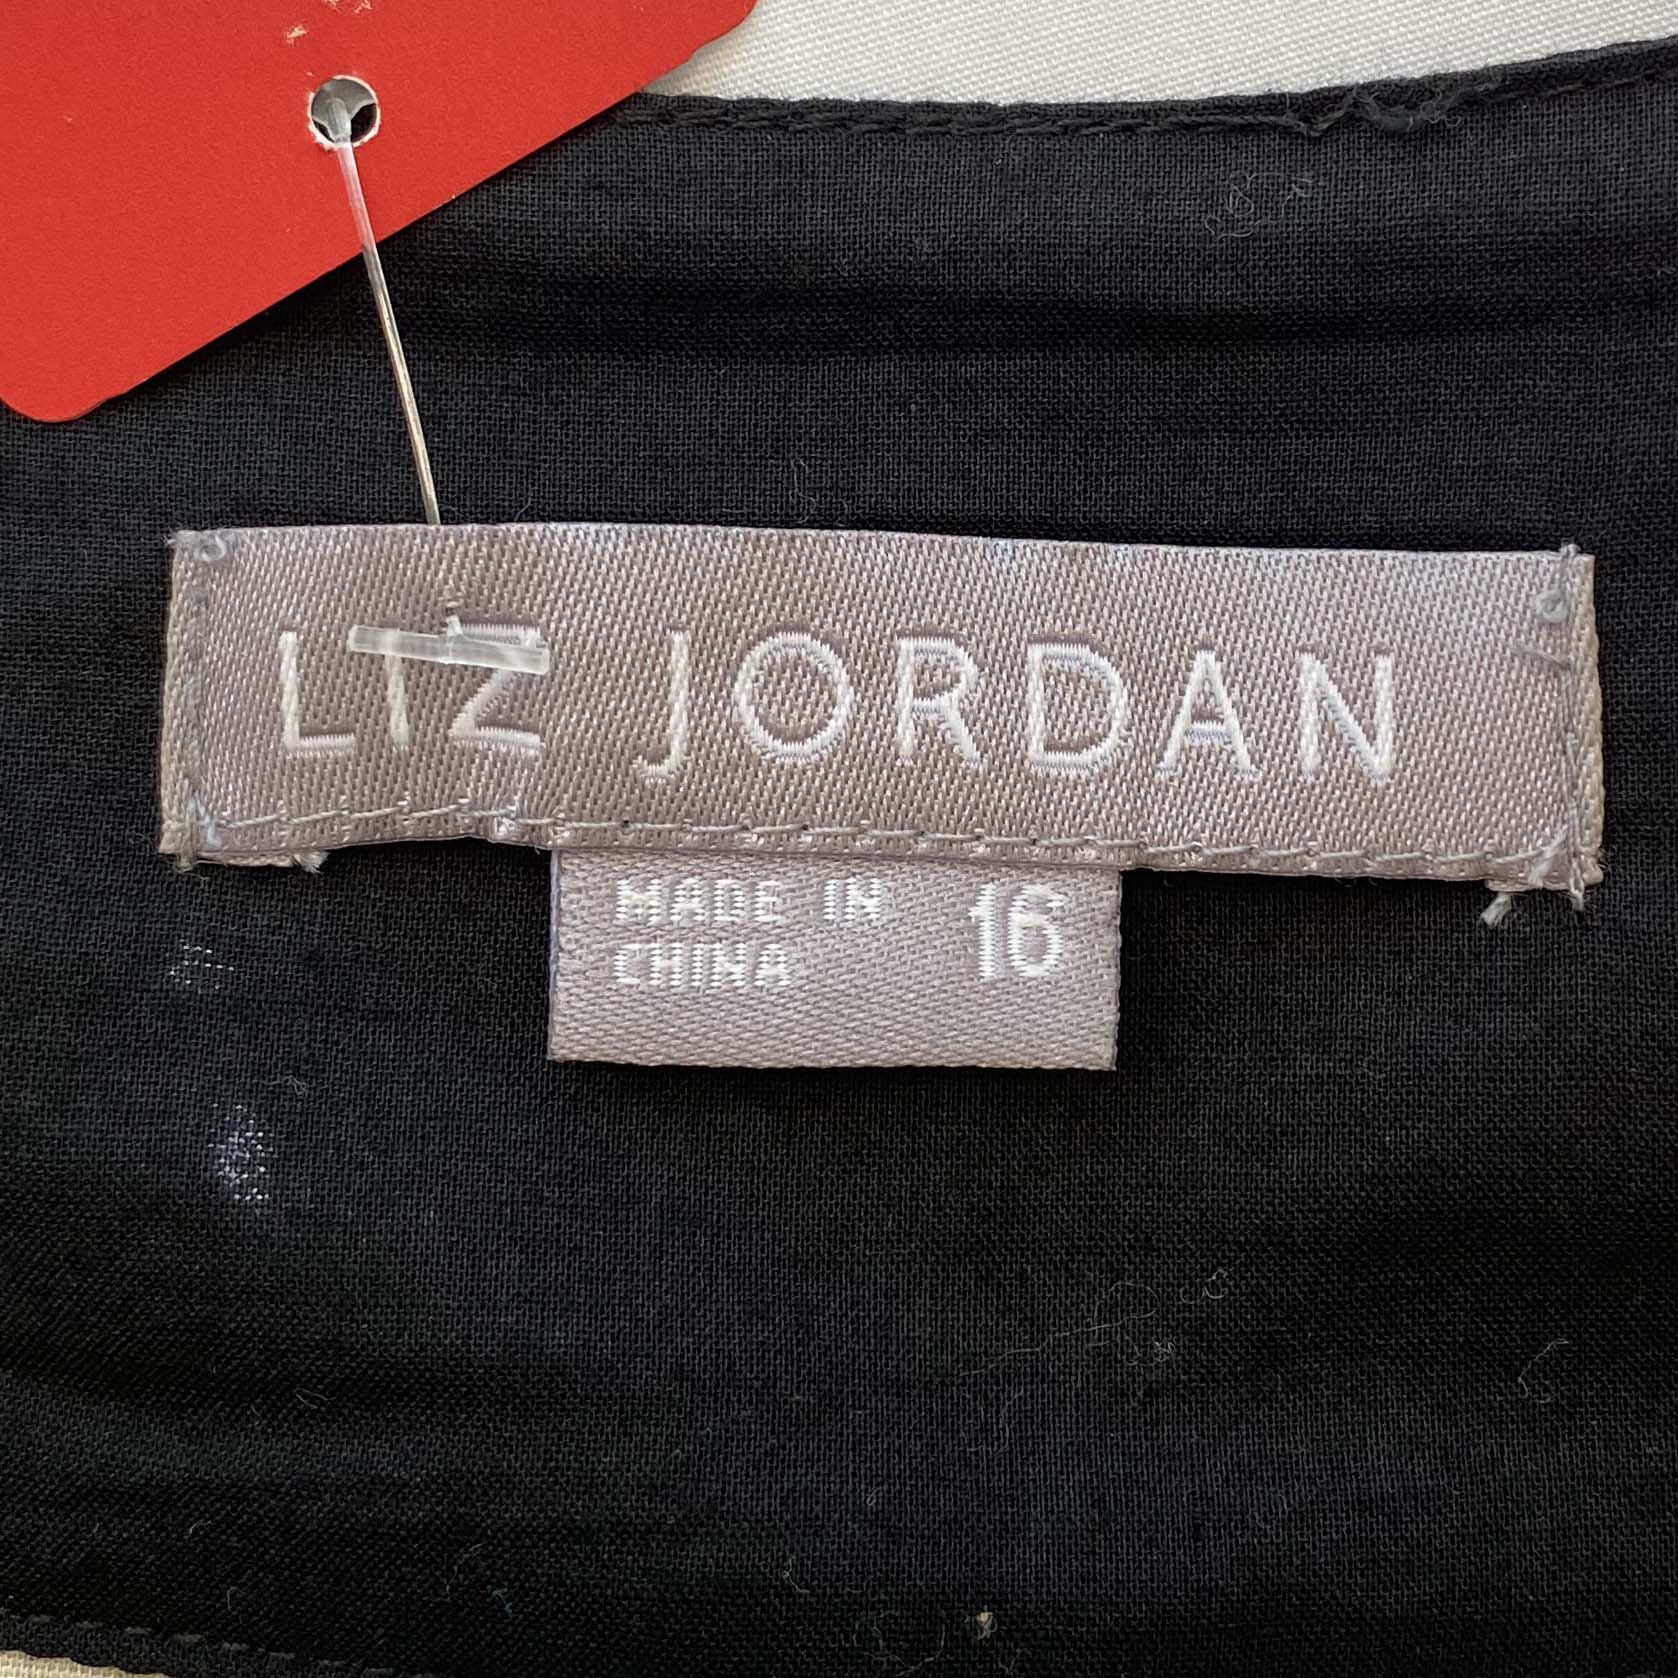 LIZ JORDAN Black and Cream Skirt